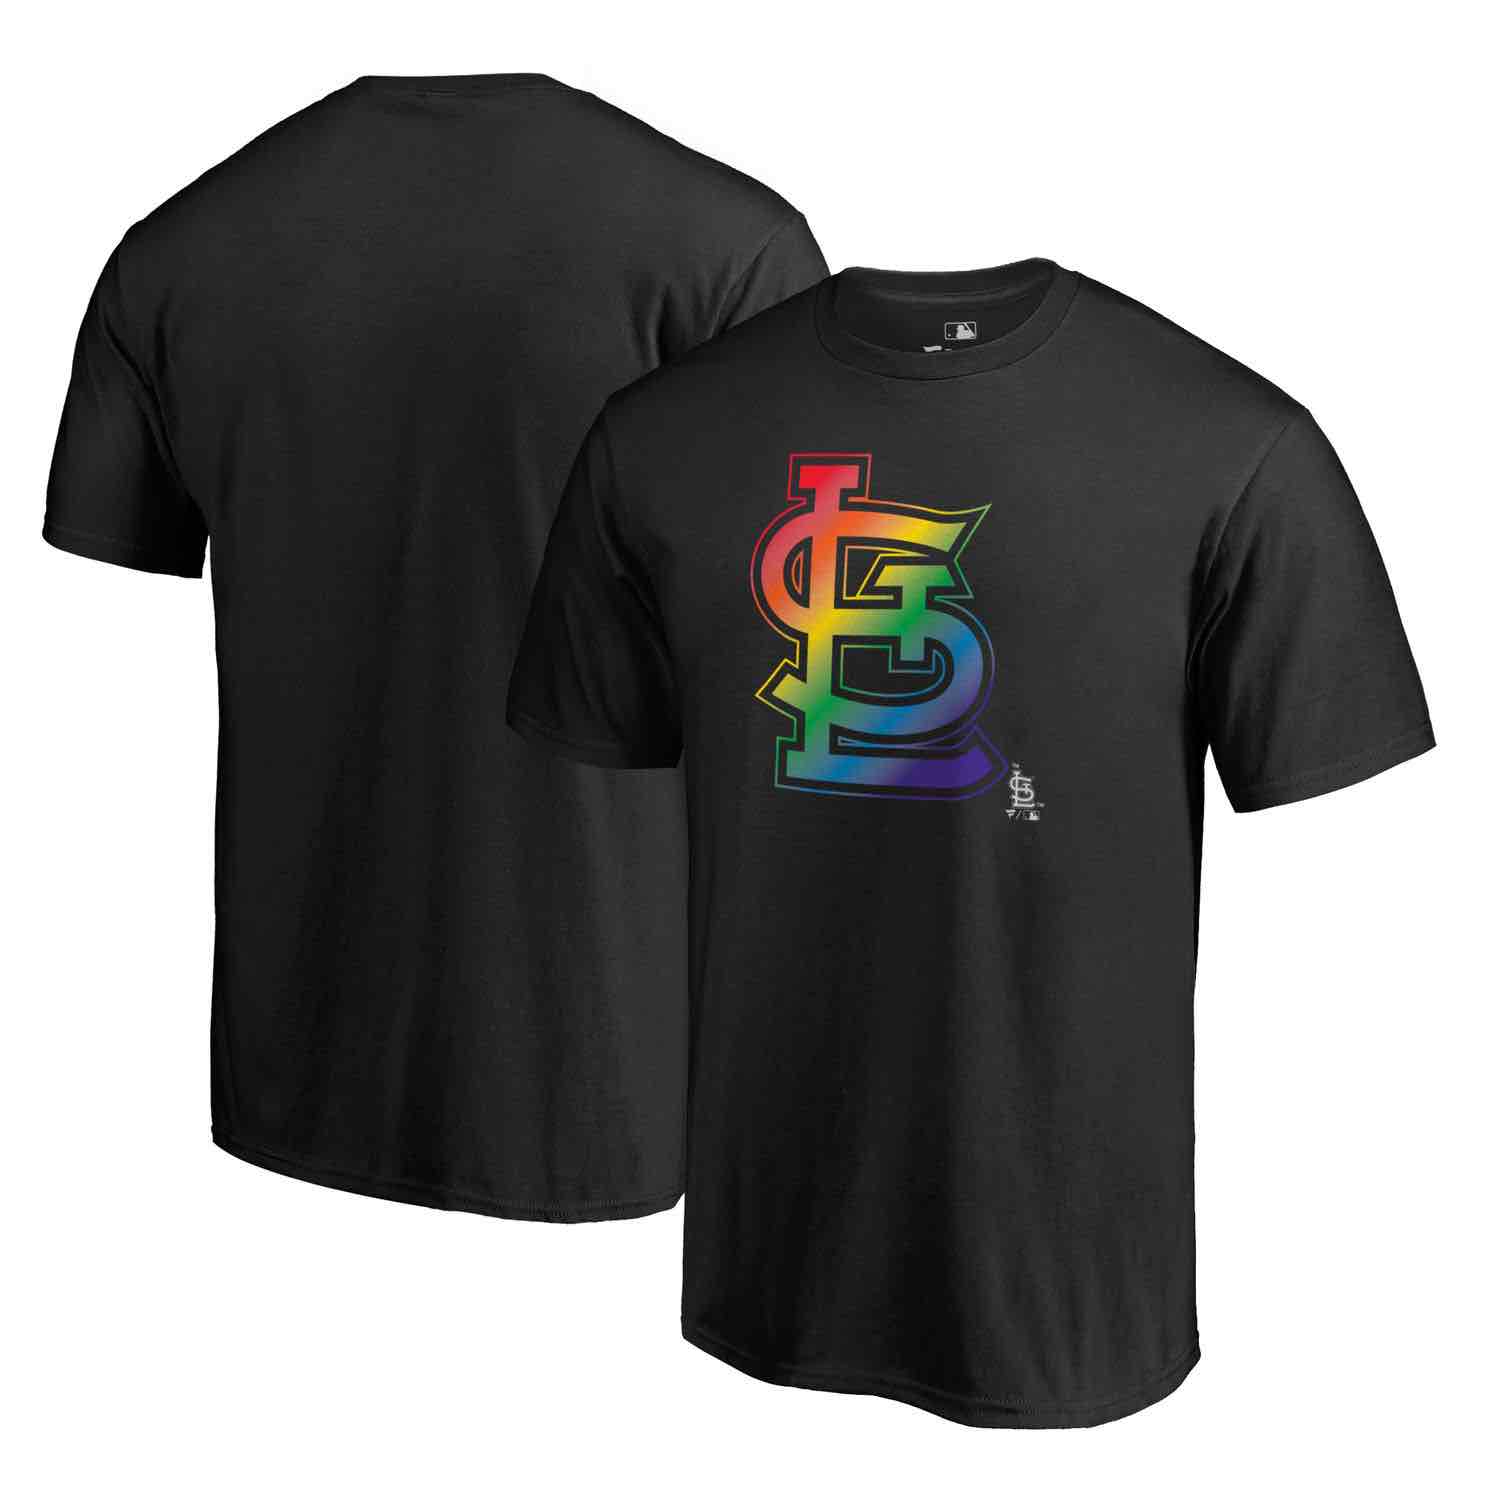 Mens St. Louis Cardinals Fanatics Branded Pride Black T-Shirt